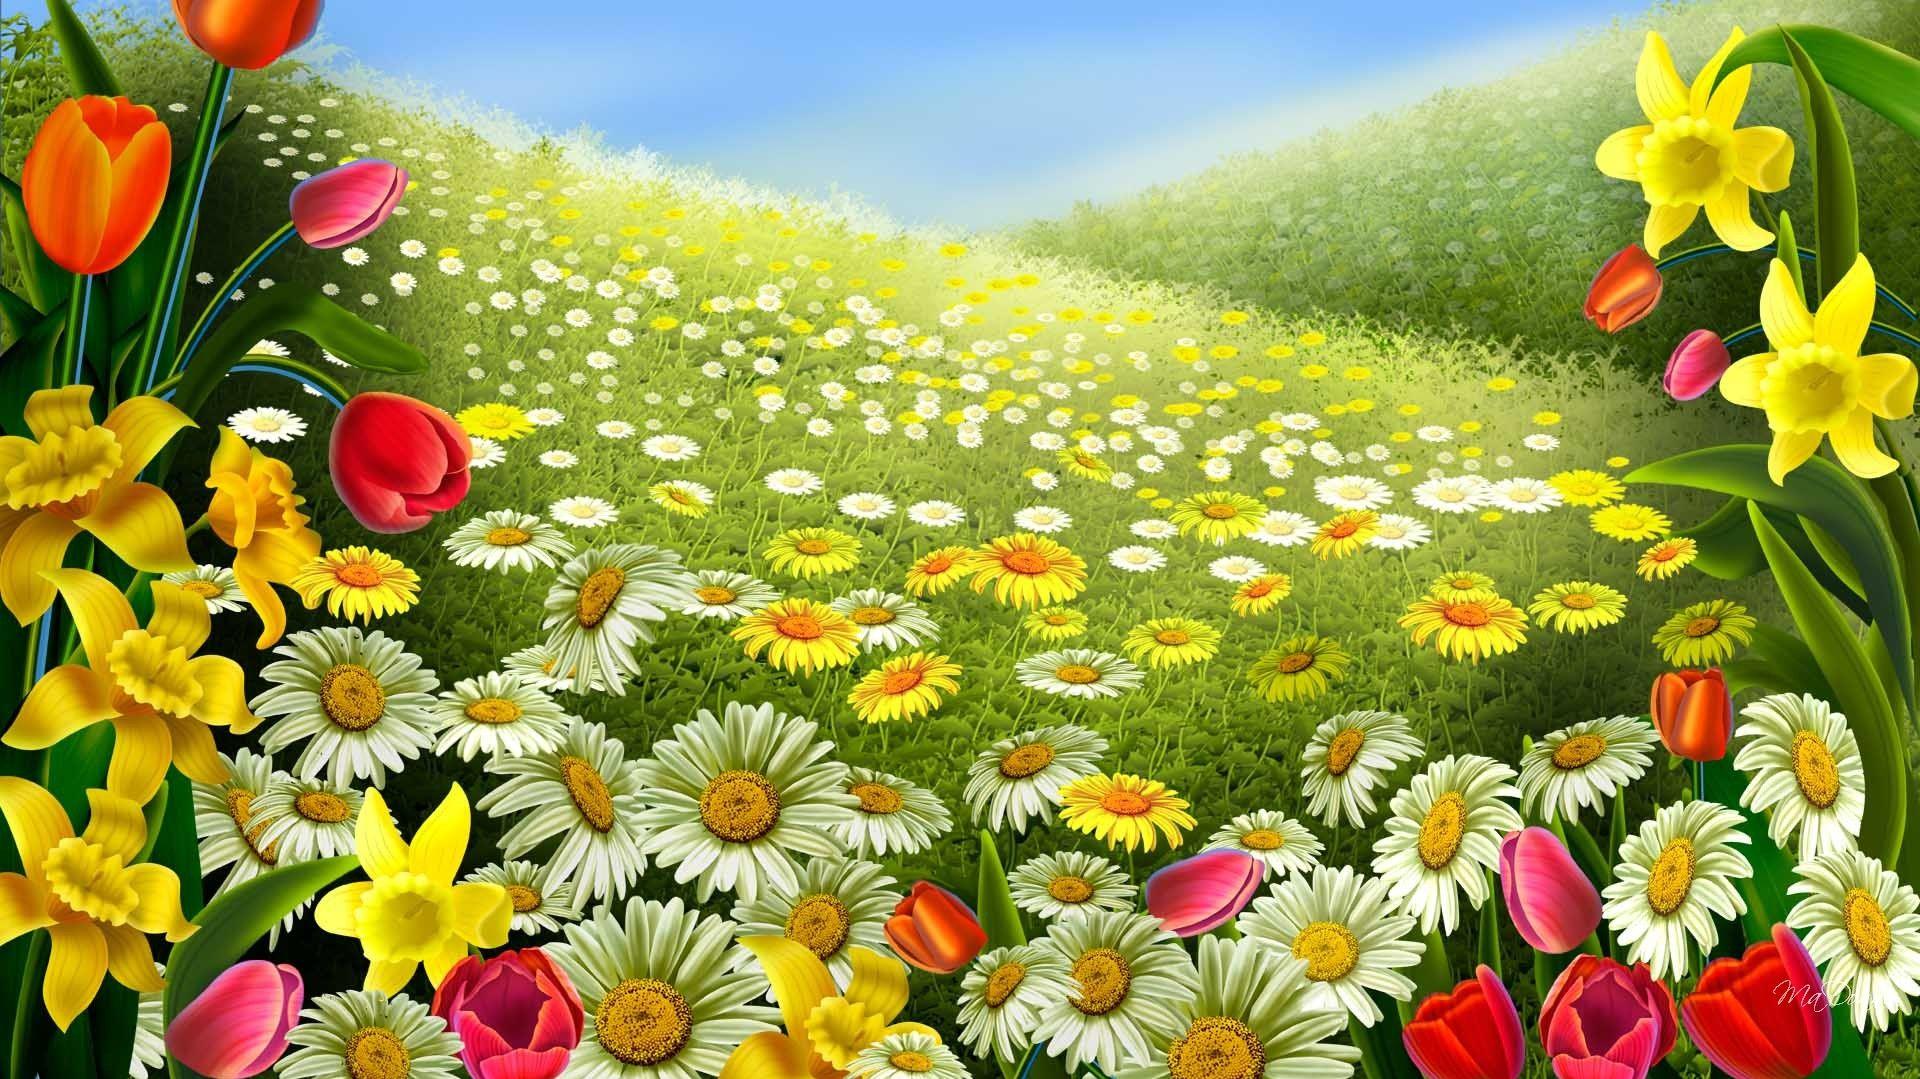 Great Spring Nature Wallpaper Desktop HD